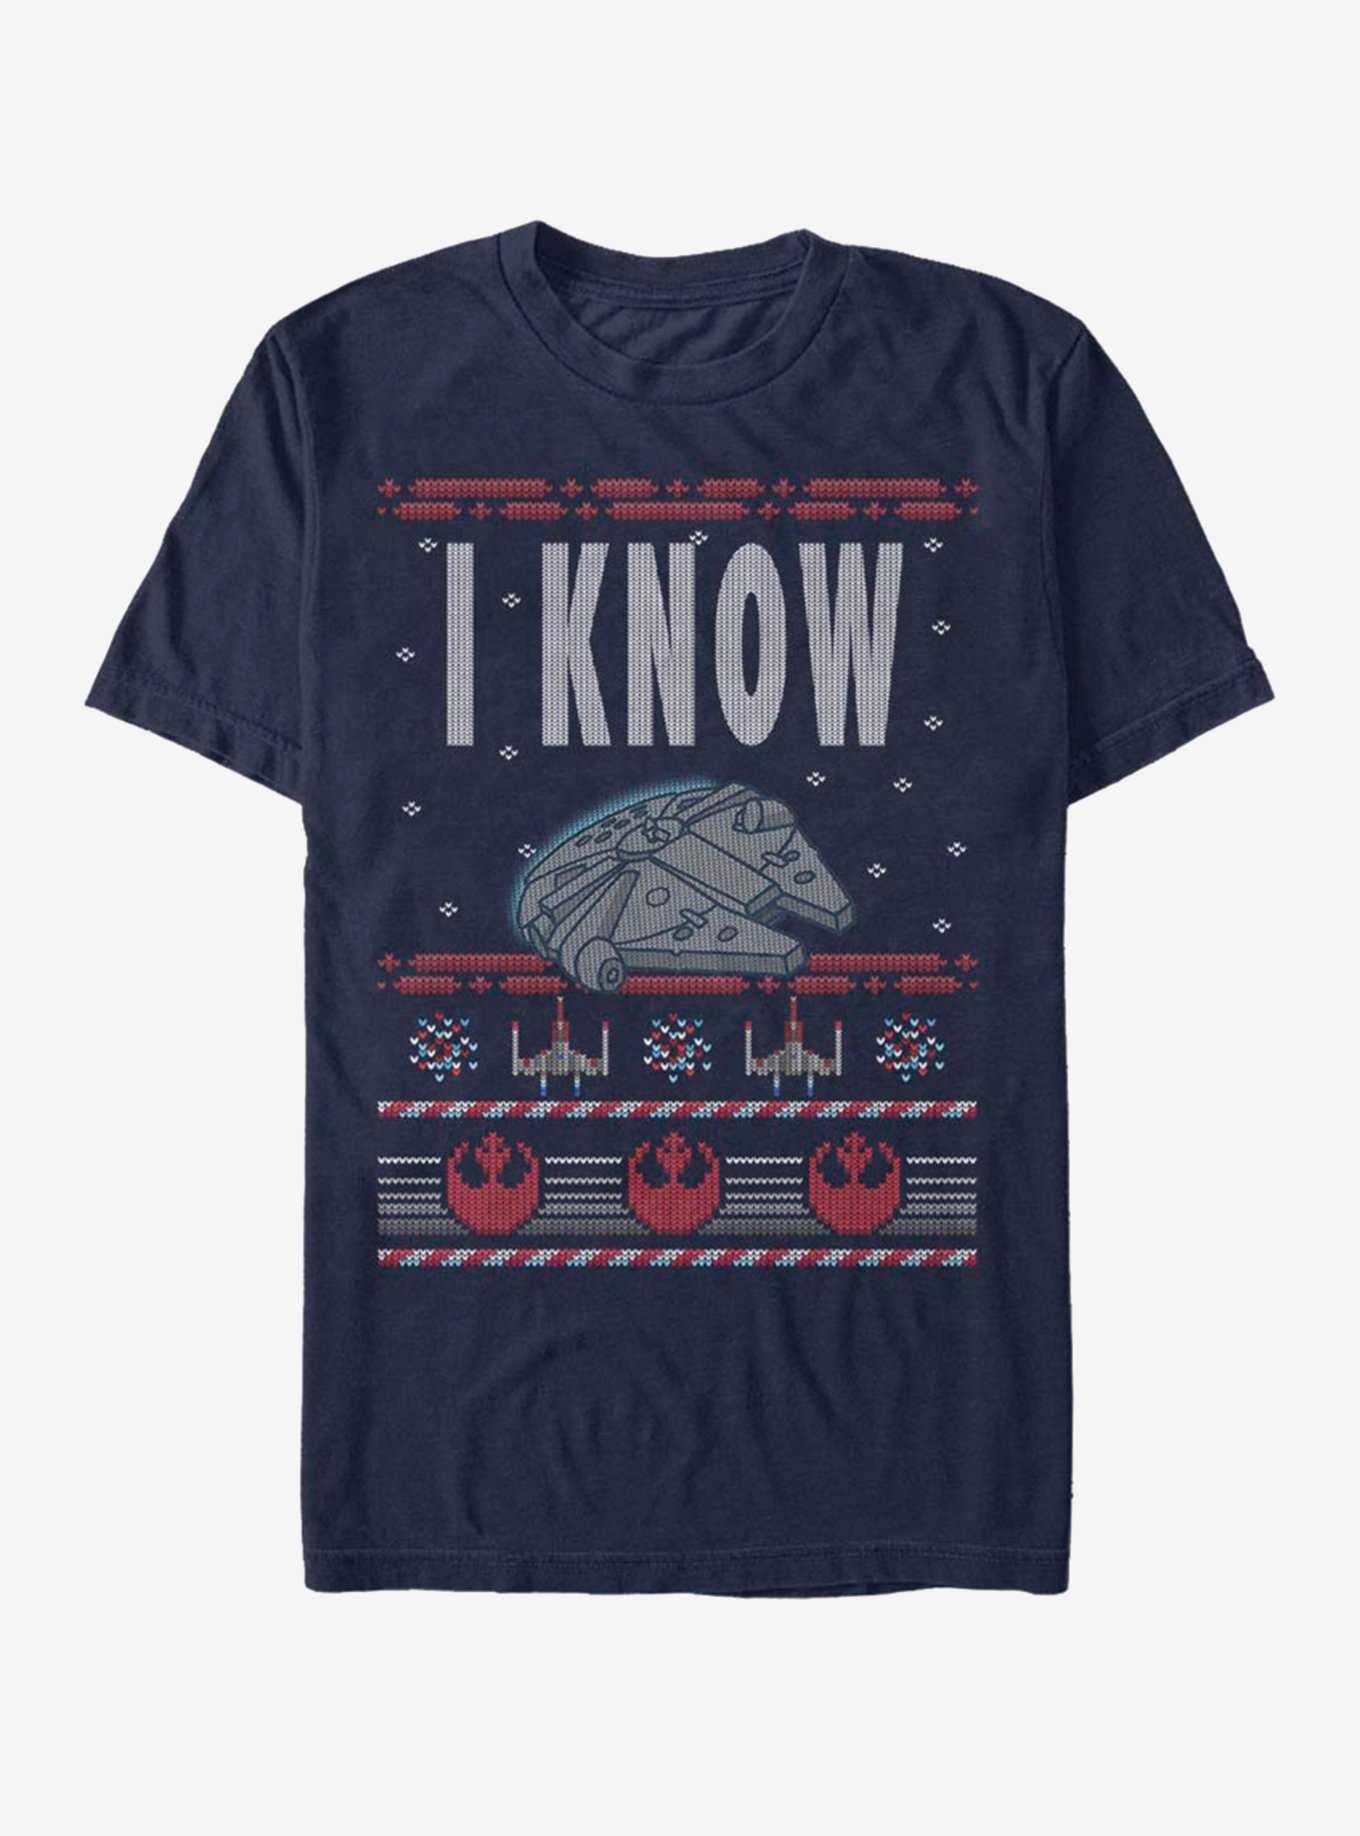 Star Wars Ugly I Know T-Shirt, , hi-res